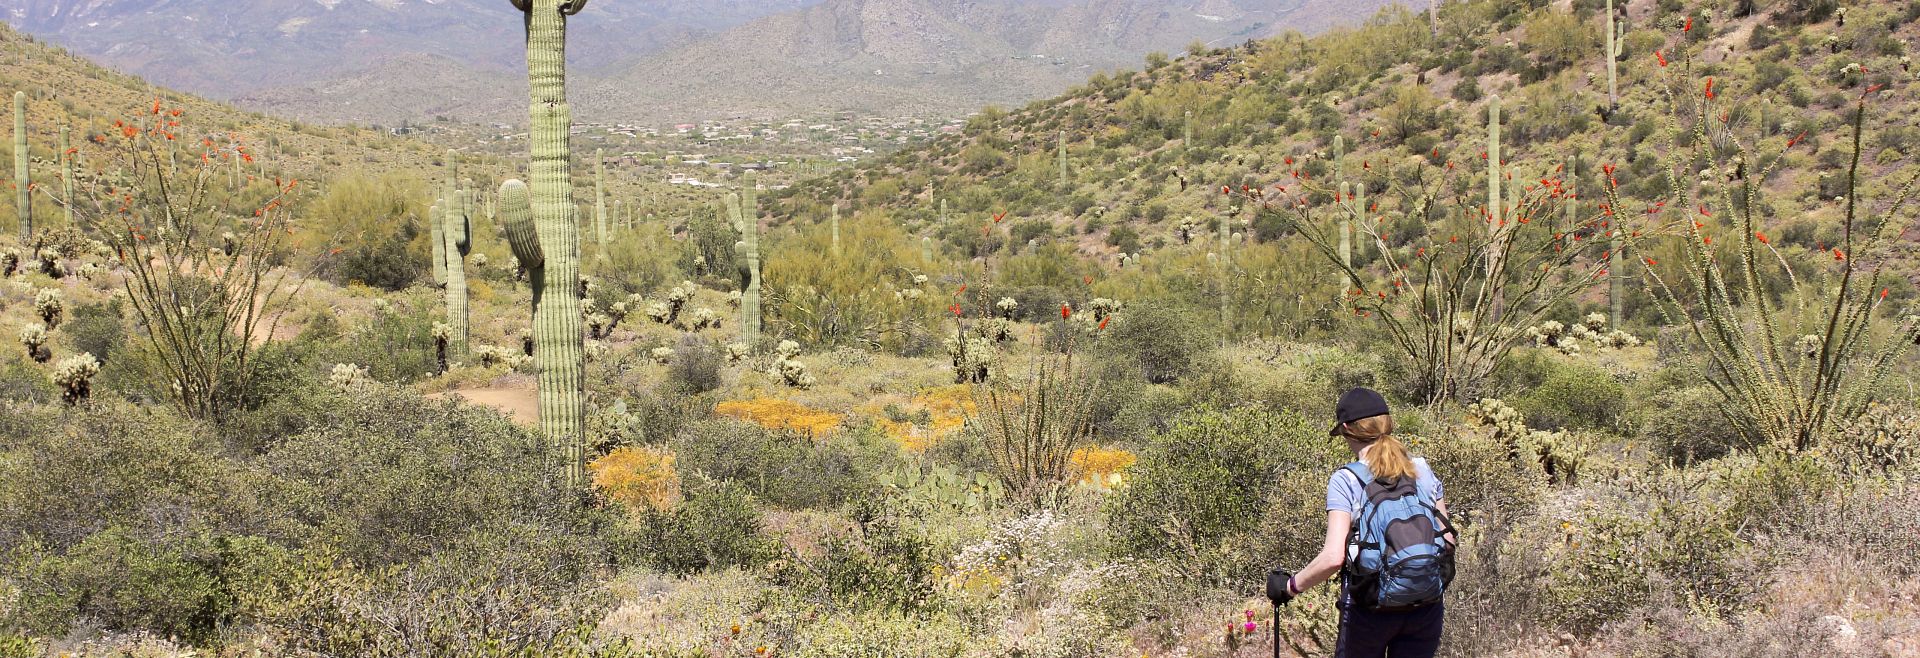 woman desert hike walk cactus